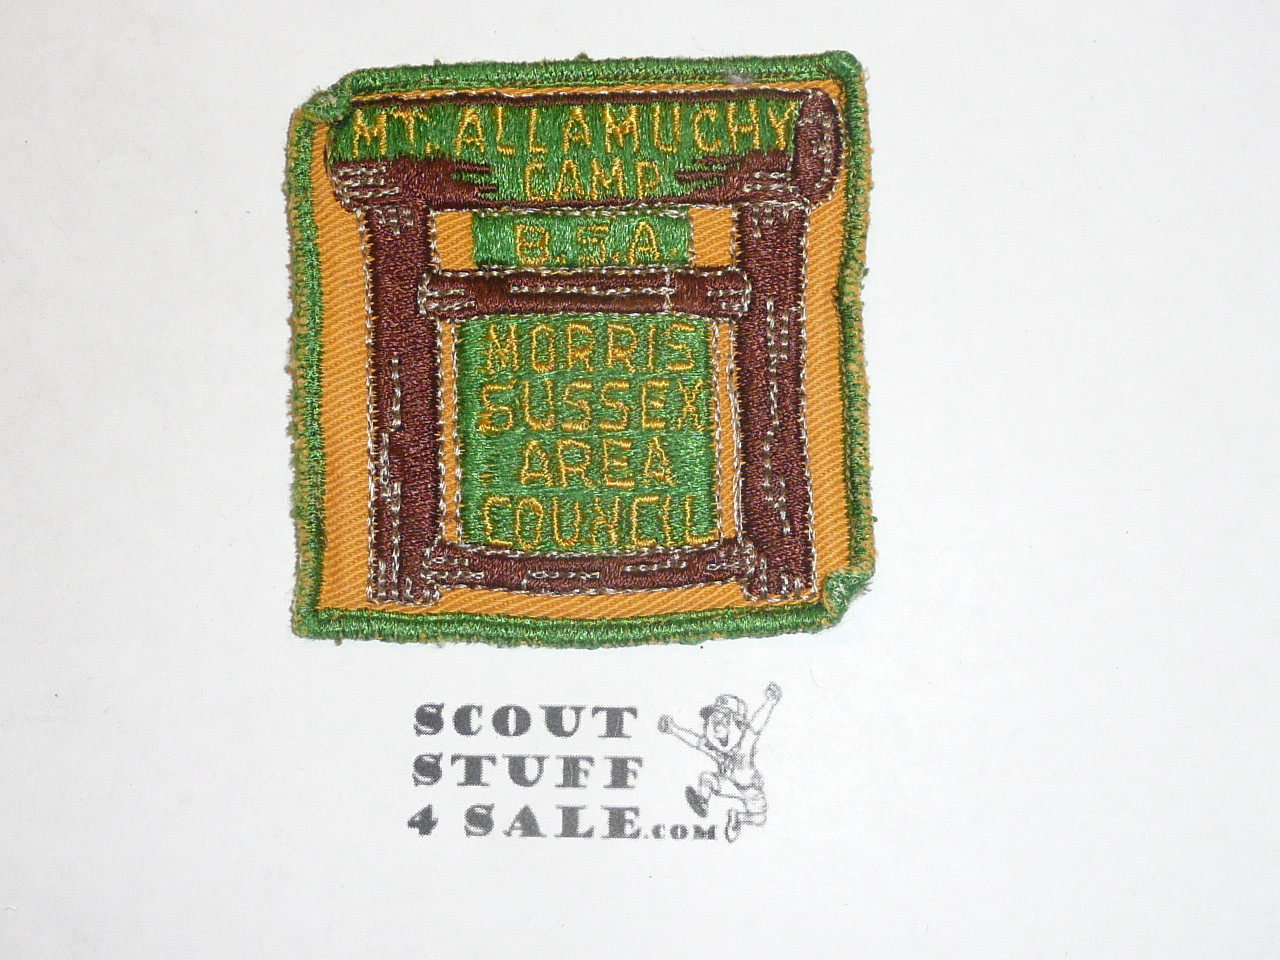 Mt. Allamuchy Camp, Morris Sussex Area Council, Patch, c/e twill, sewn